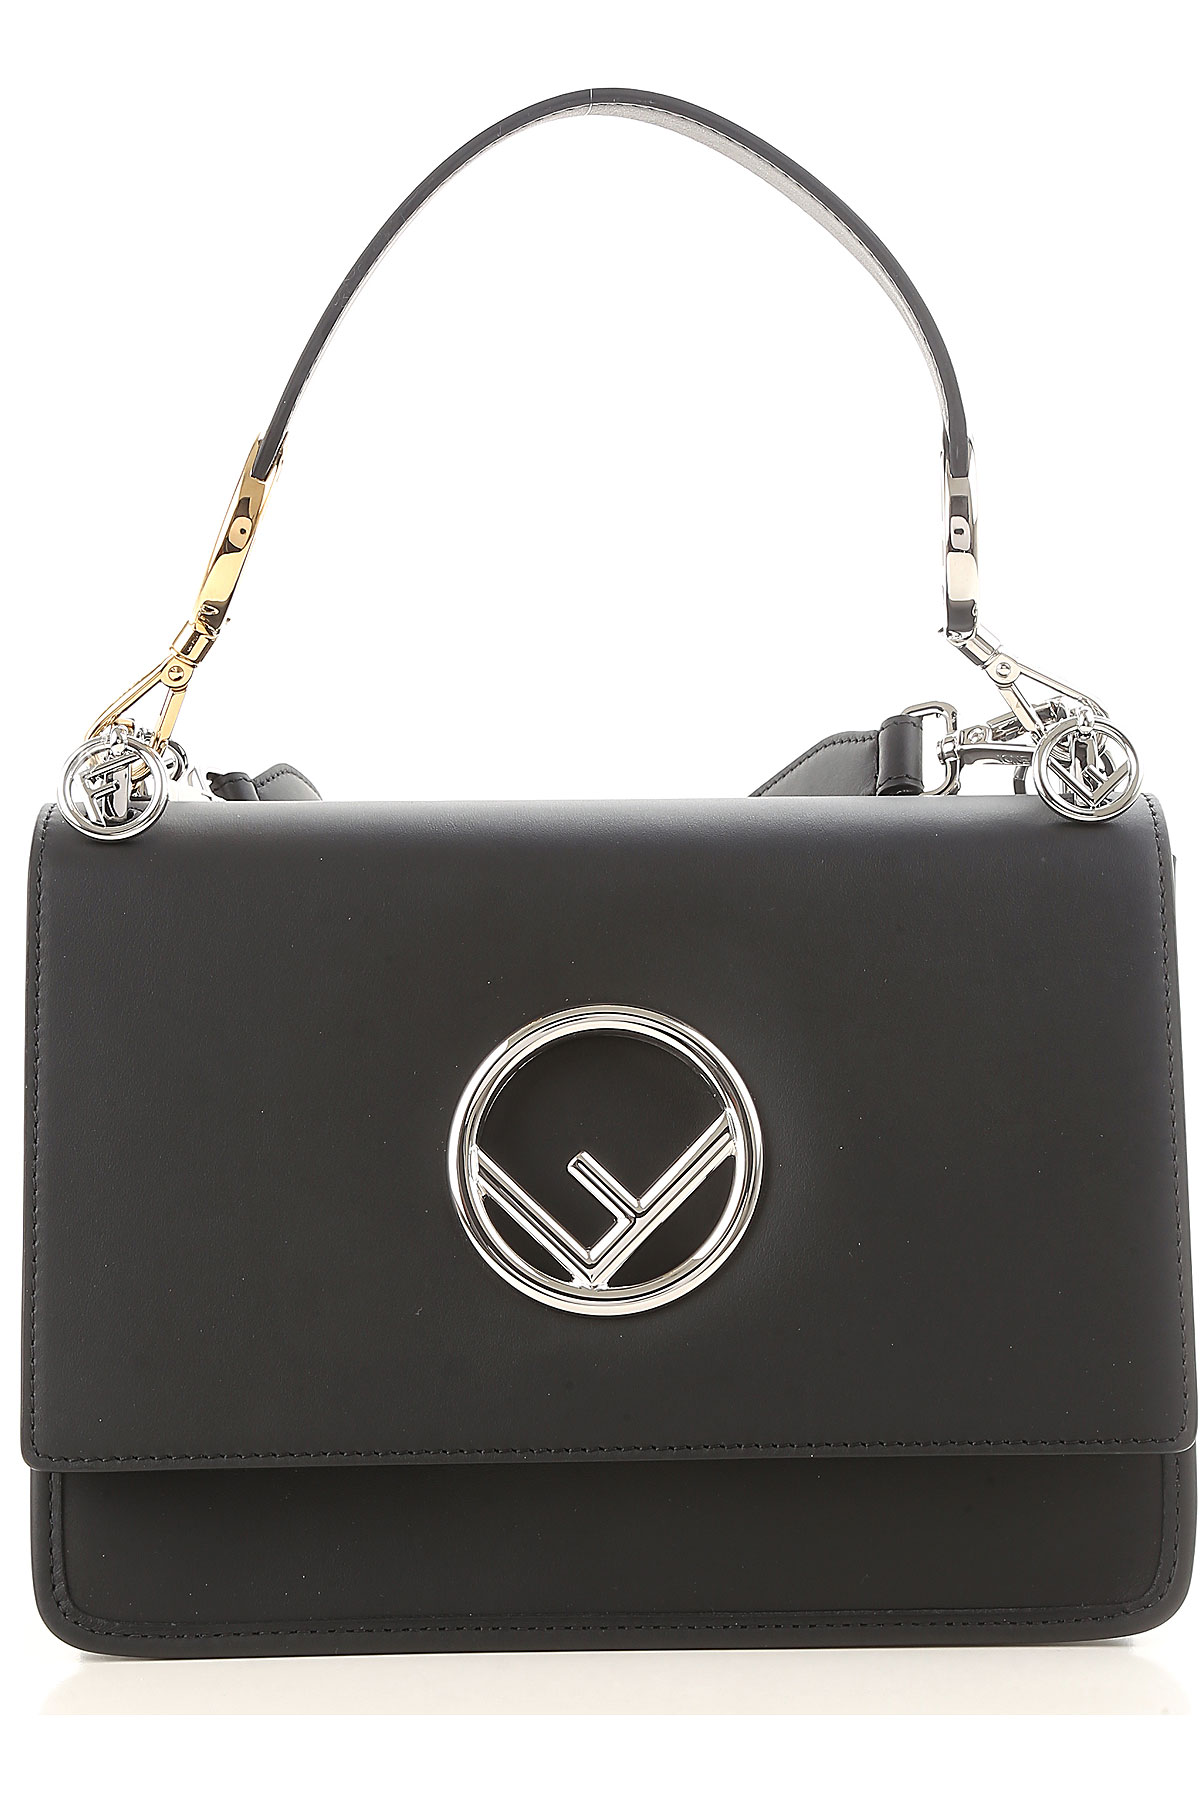 Handbags Fendi, Style code: 8bt284-2ih-f0gxn